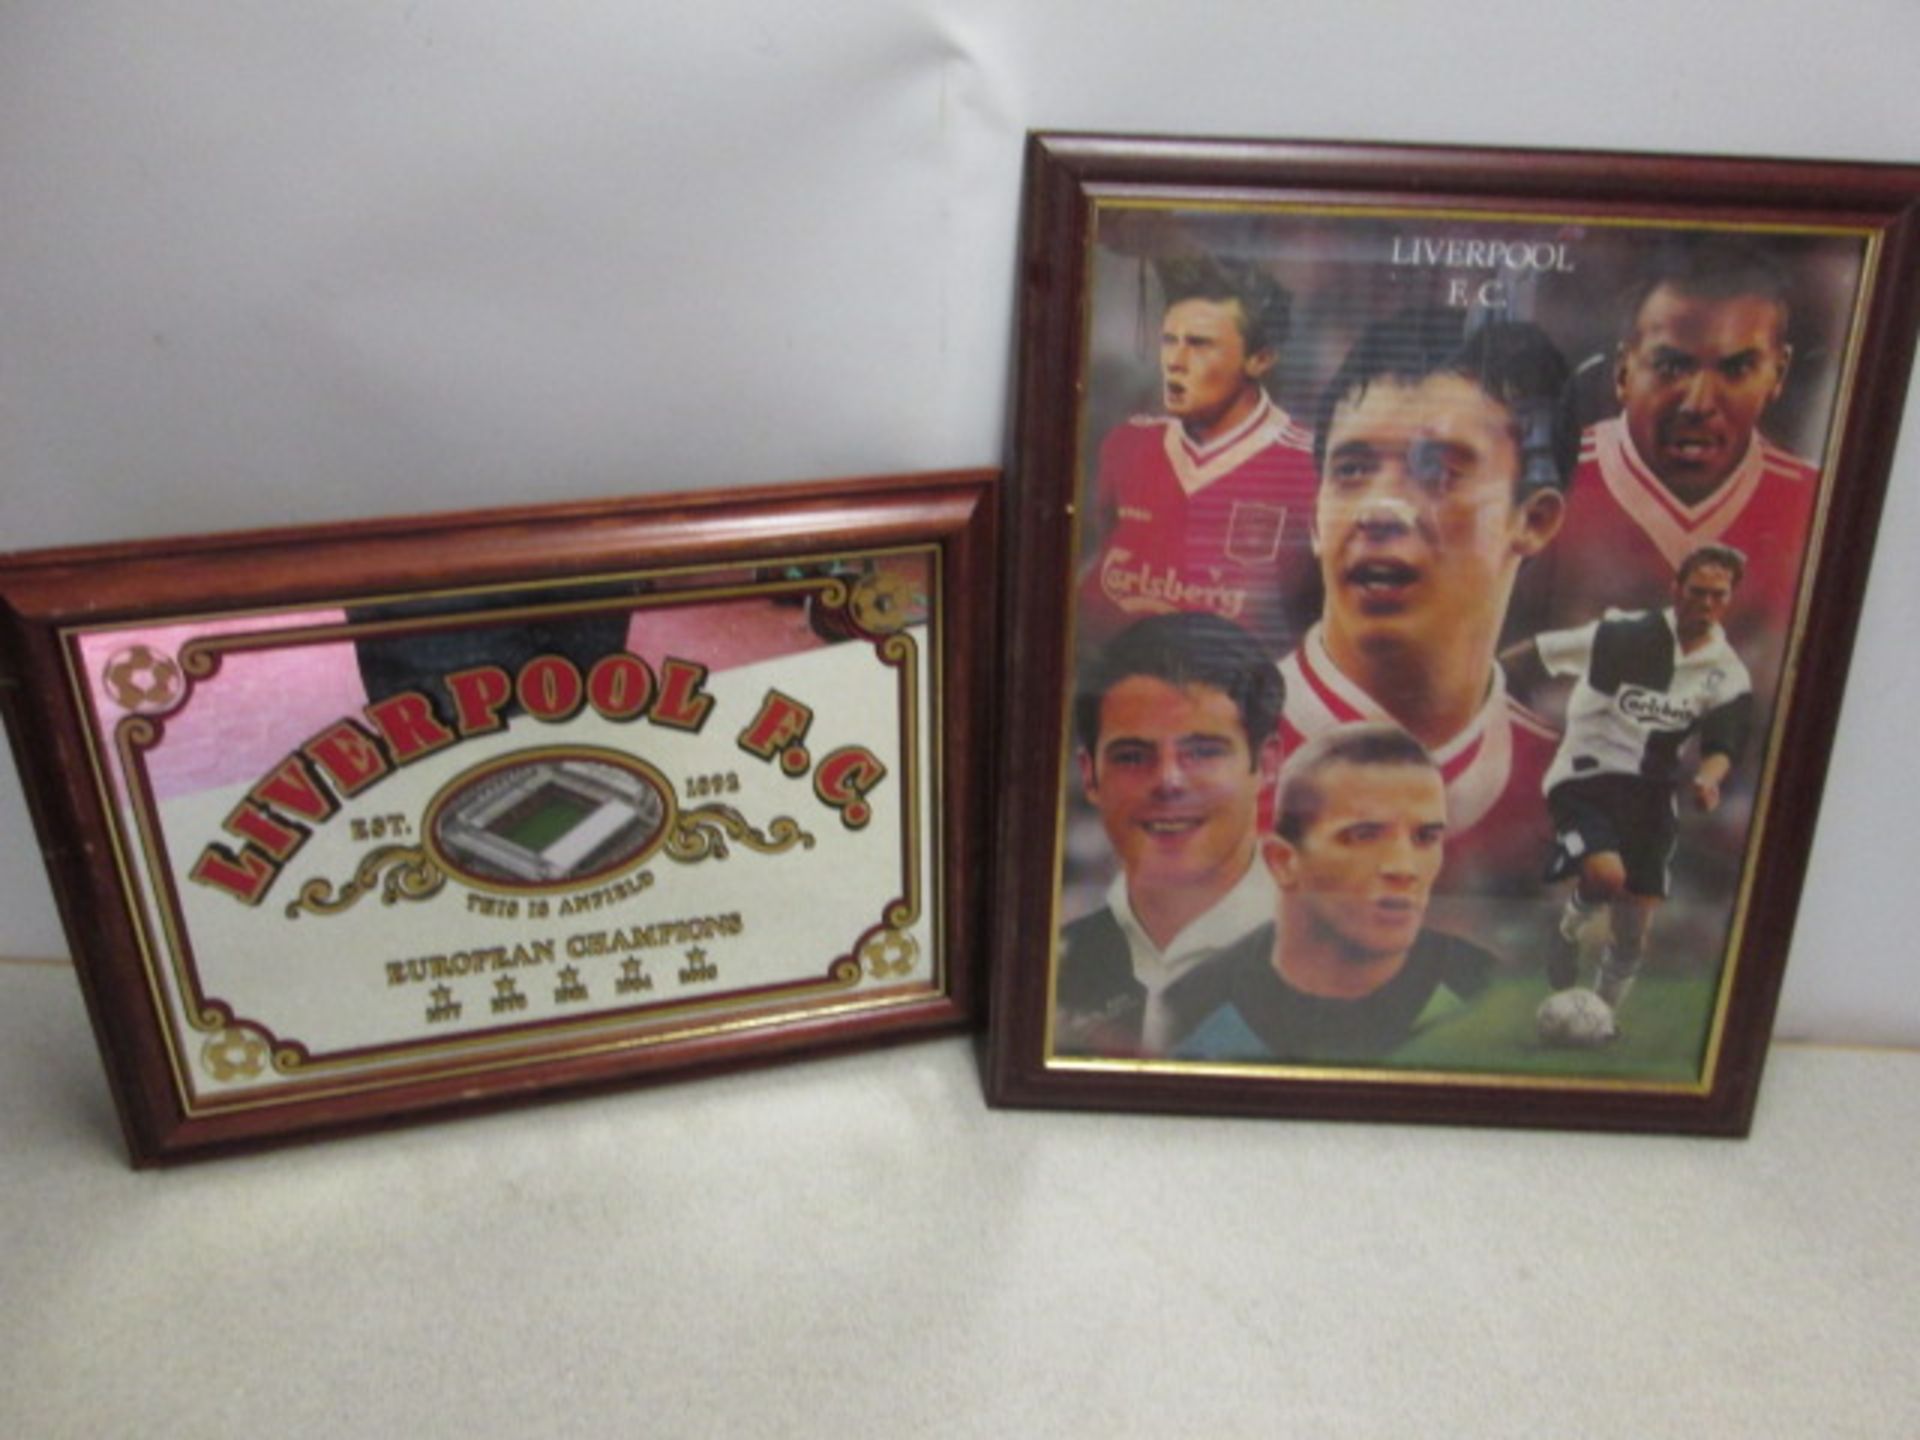 2 x Framed Liverpool FC Memorabilia Items. 1 x Print by Steve Mac & 1 x Mirrored Back Anfield